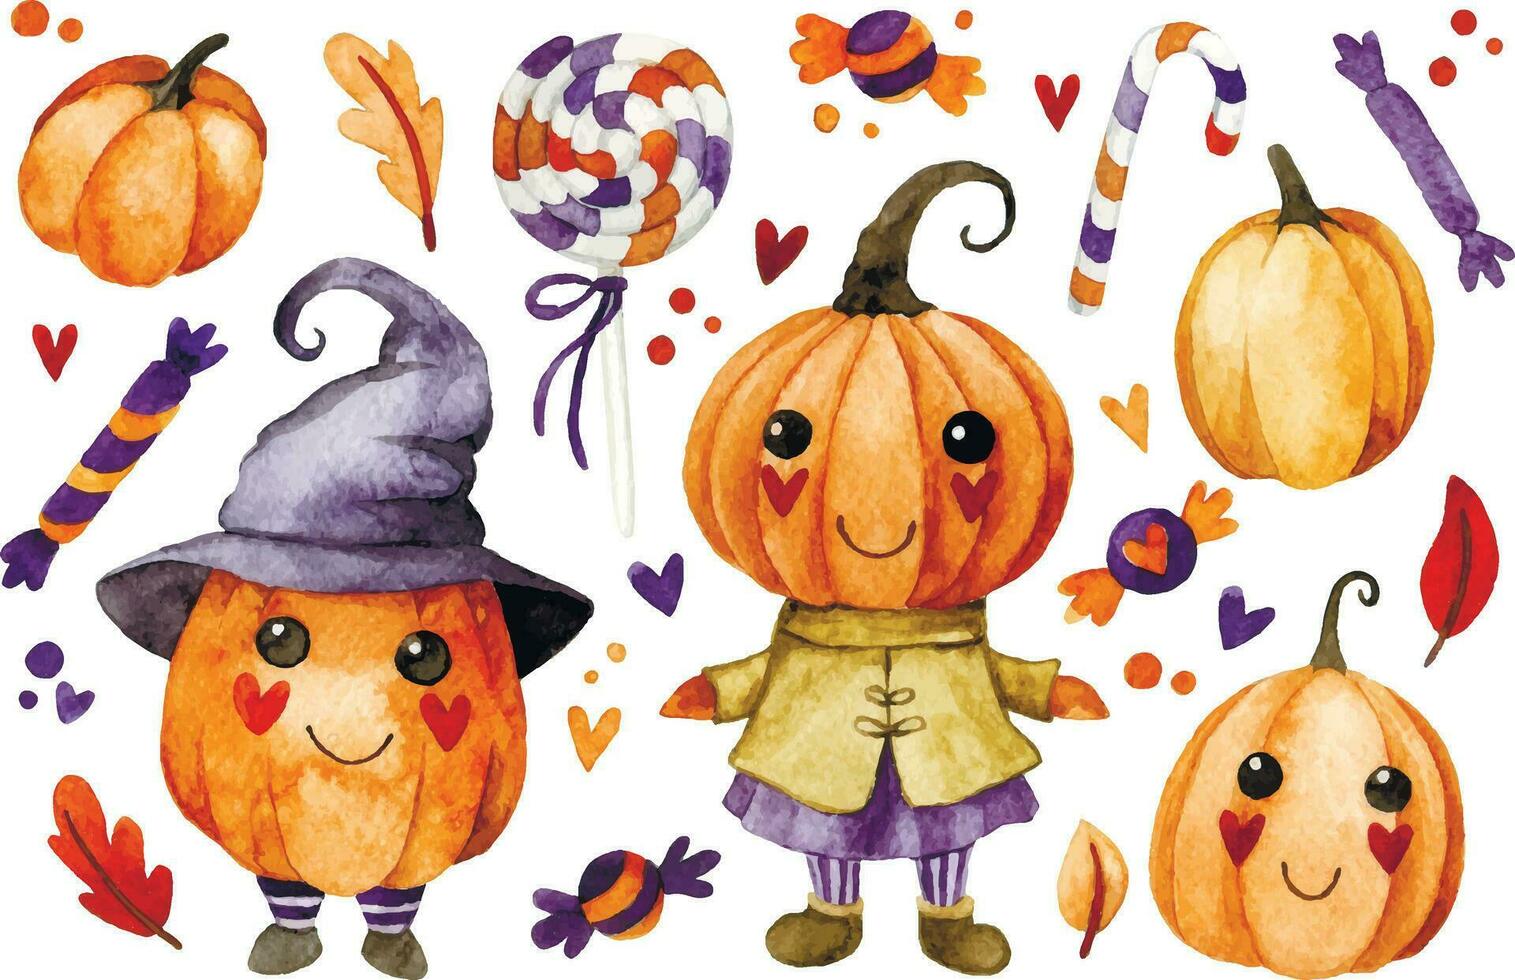 Watercolor drawing, set of cute characters Halloween pumpkins, sweets and candies. kawaii. vector